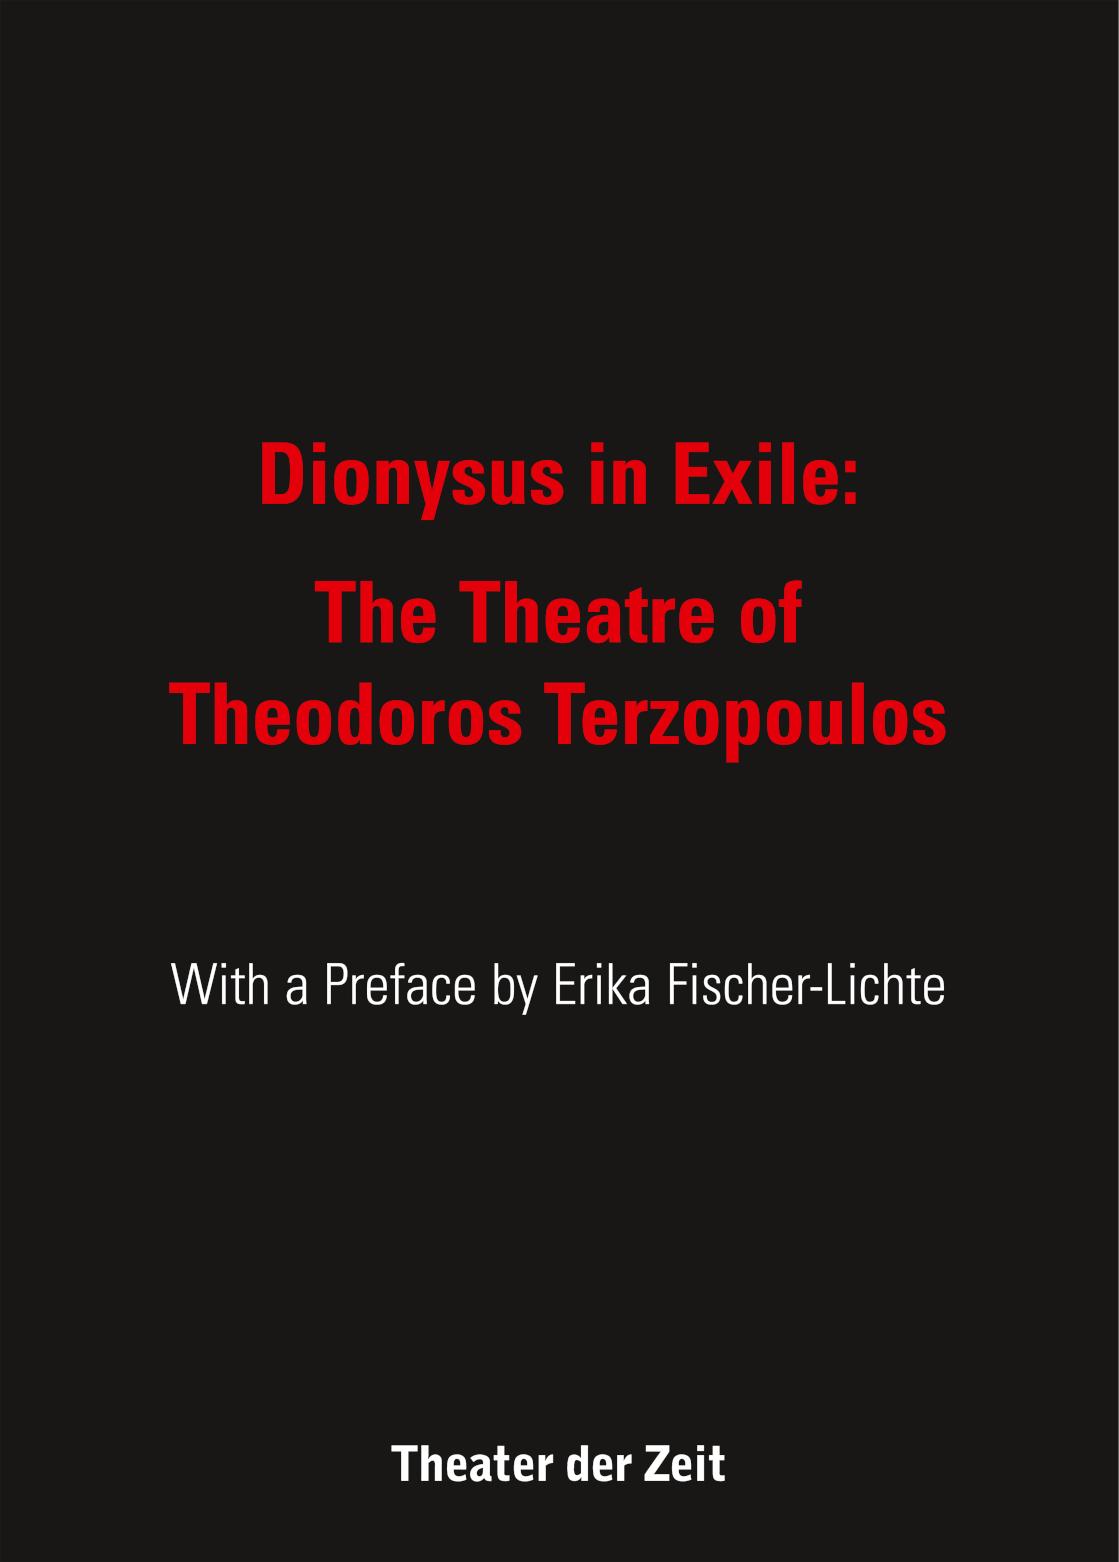 "Dionysus in Exile:"